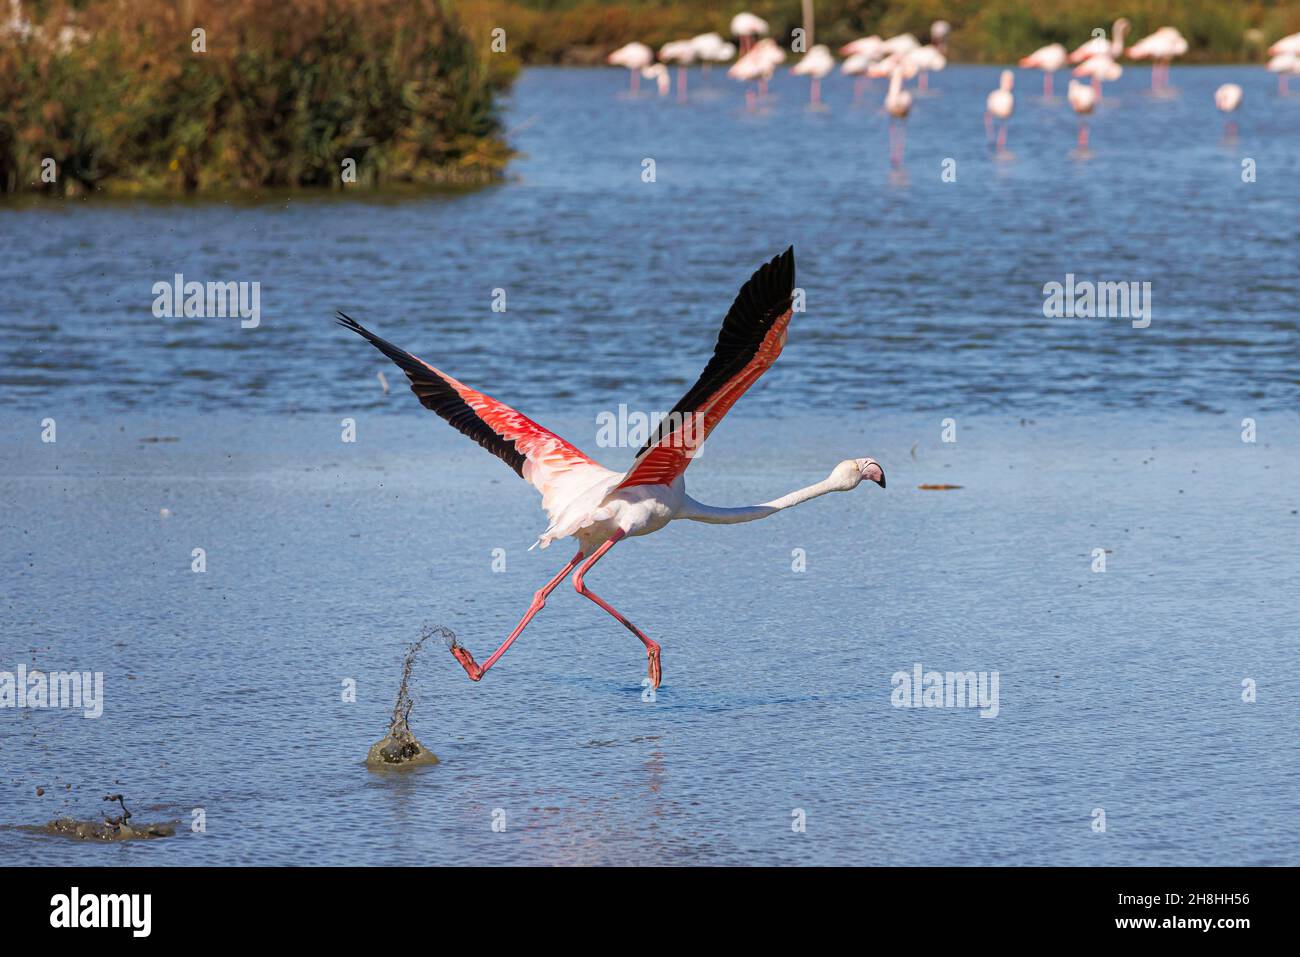 Frankreich, Bouches du Rhone, Stes Maries de la Mer, großer Flamingo, der im ornithologischen Park Pont de Gau fliegt Stockfoto